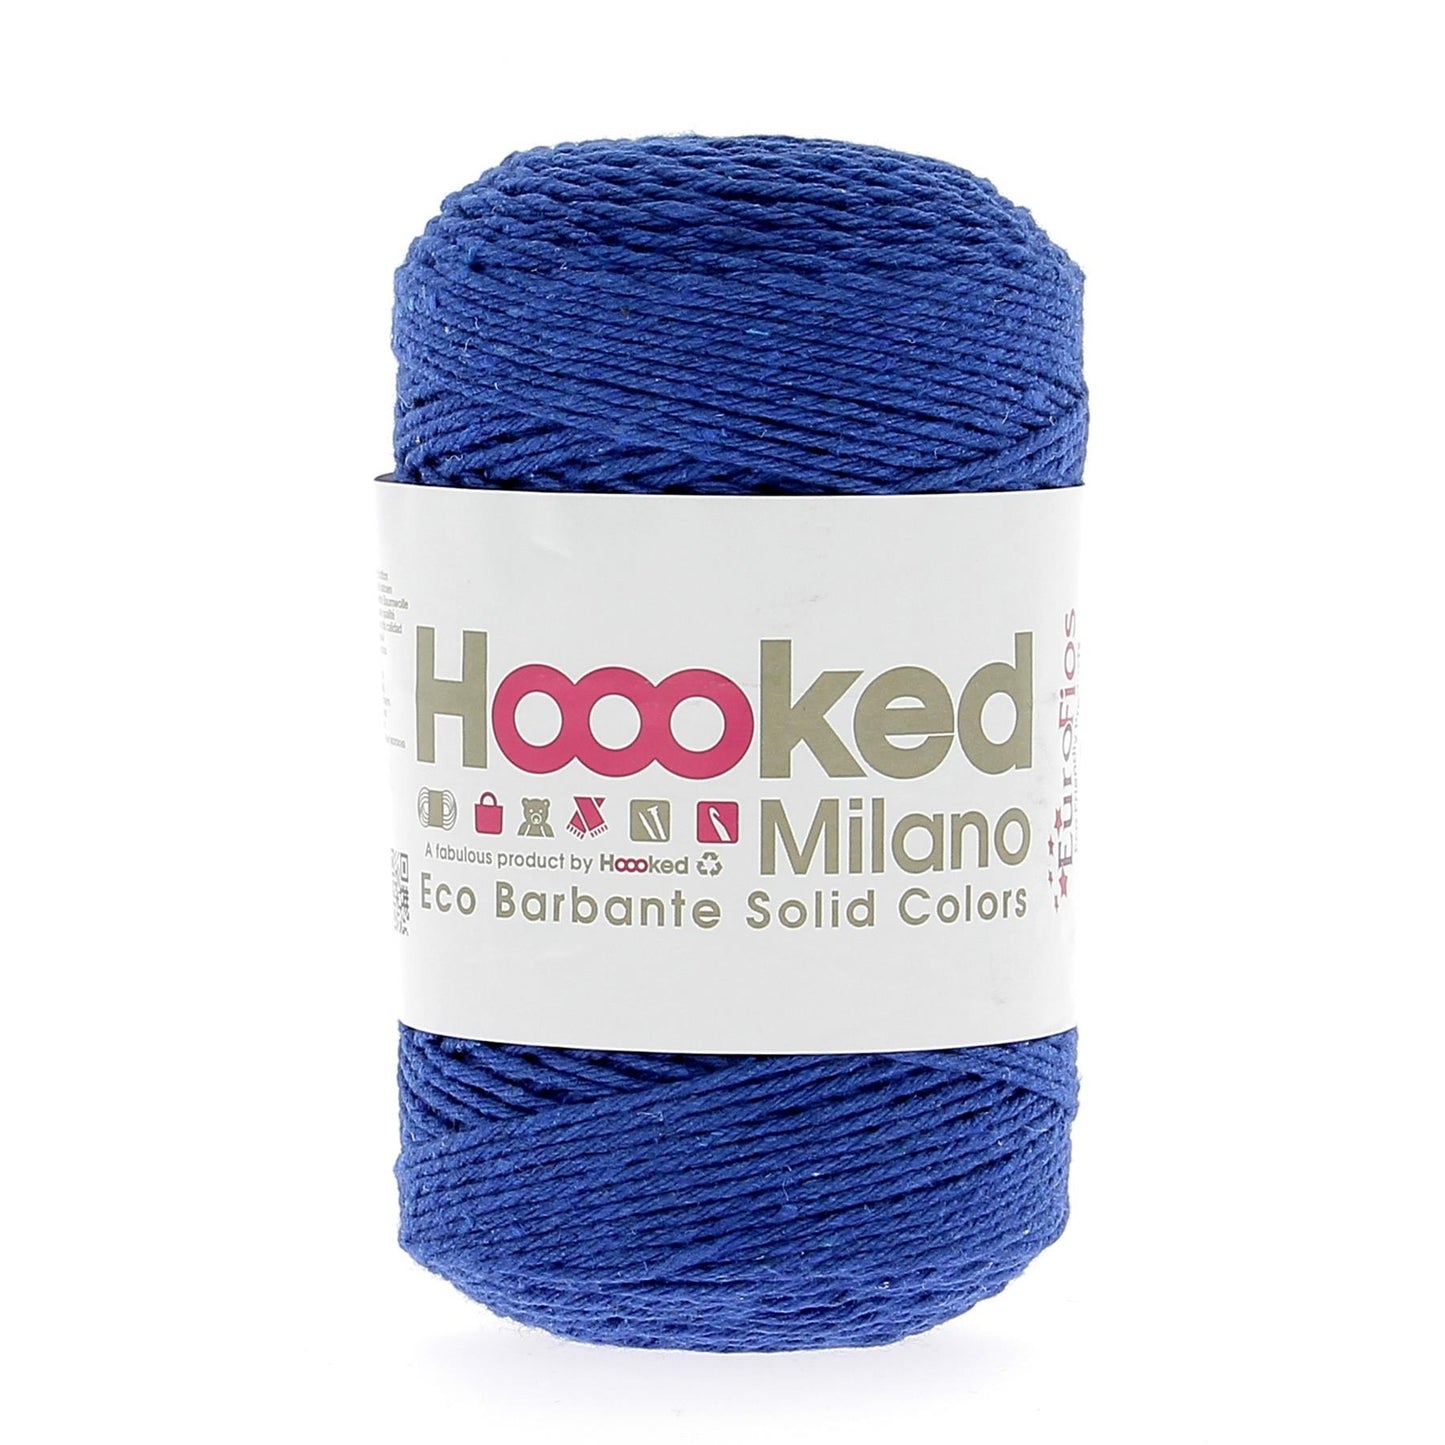 [Hoooked] R903 Eco Barbante Milano Ultramarine Cotton Yarn - 204M, 200g